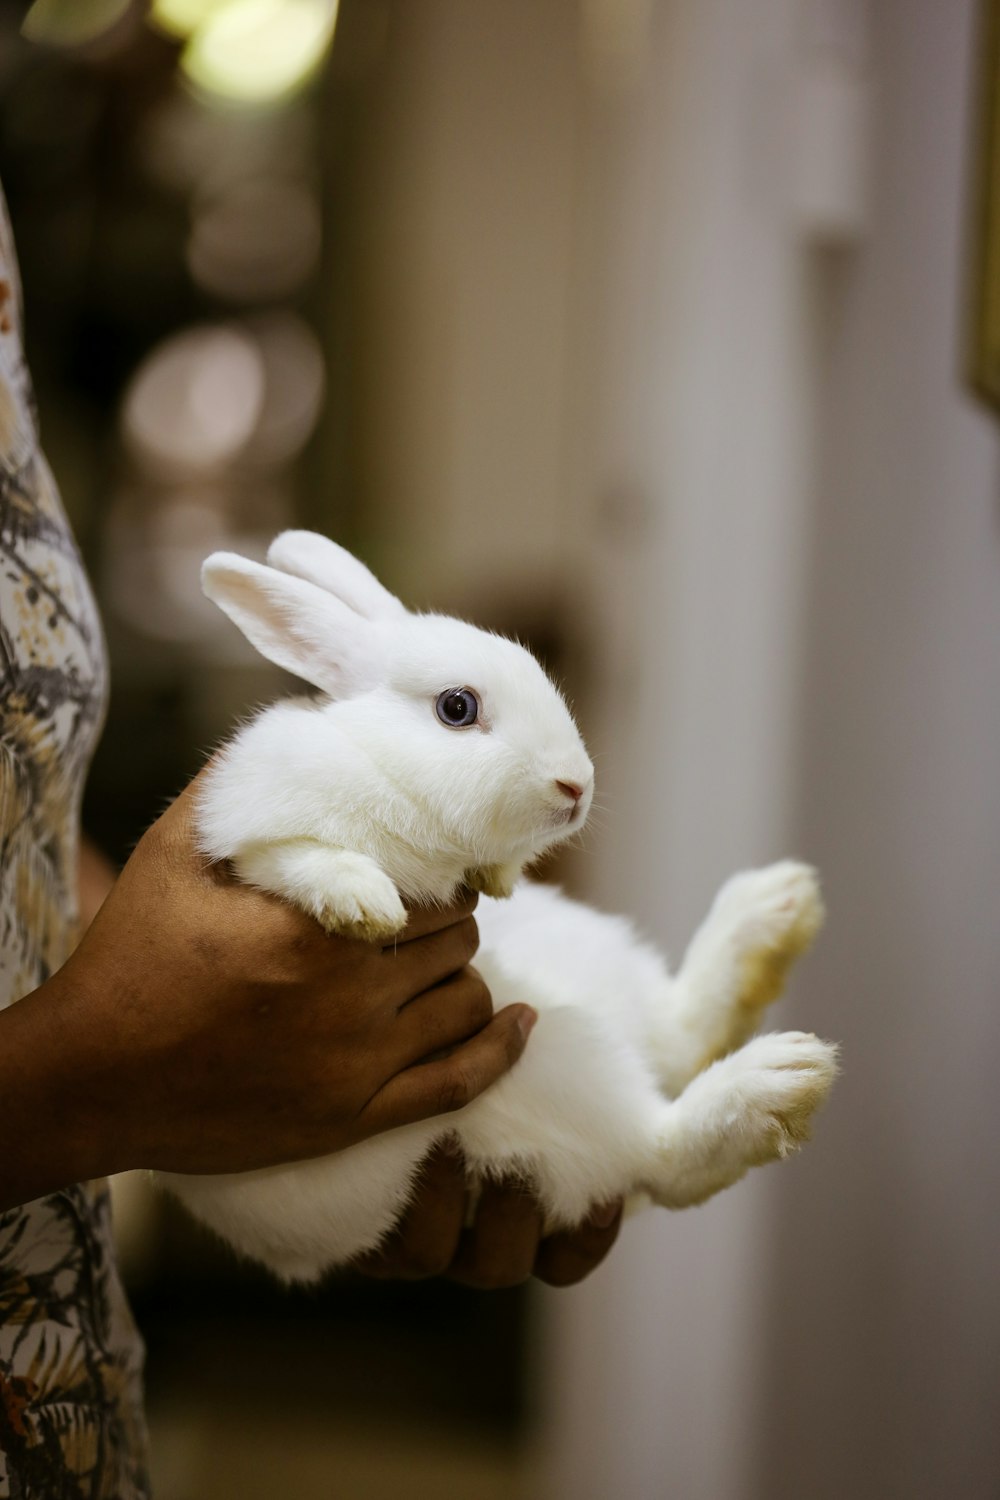 person holding white rabbit during daytime